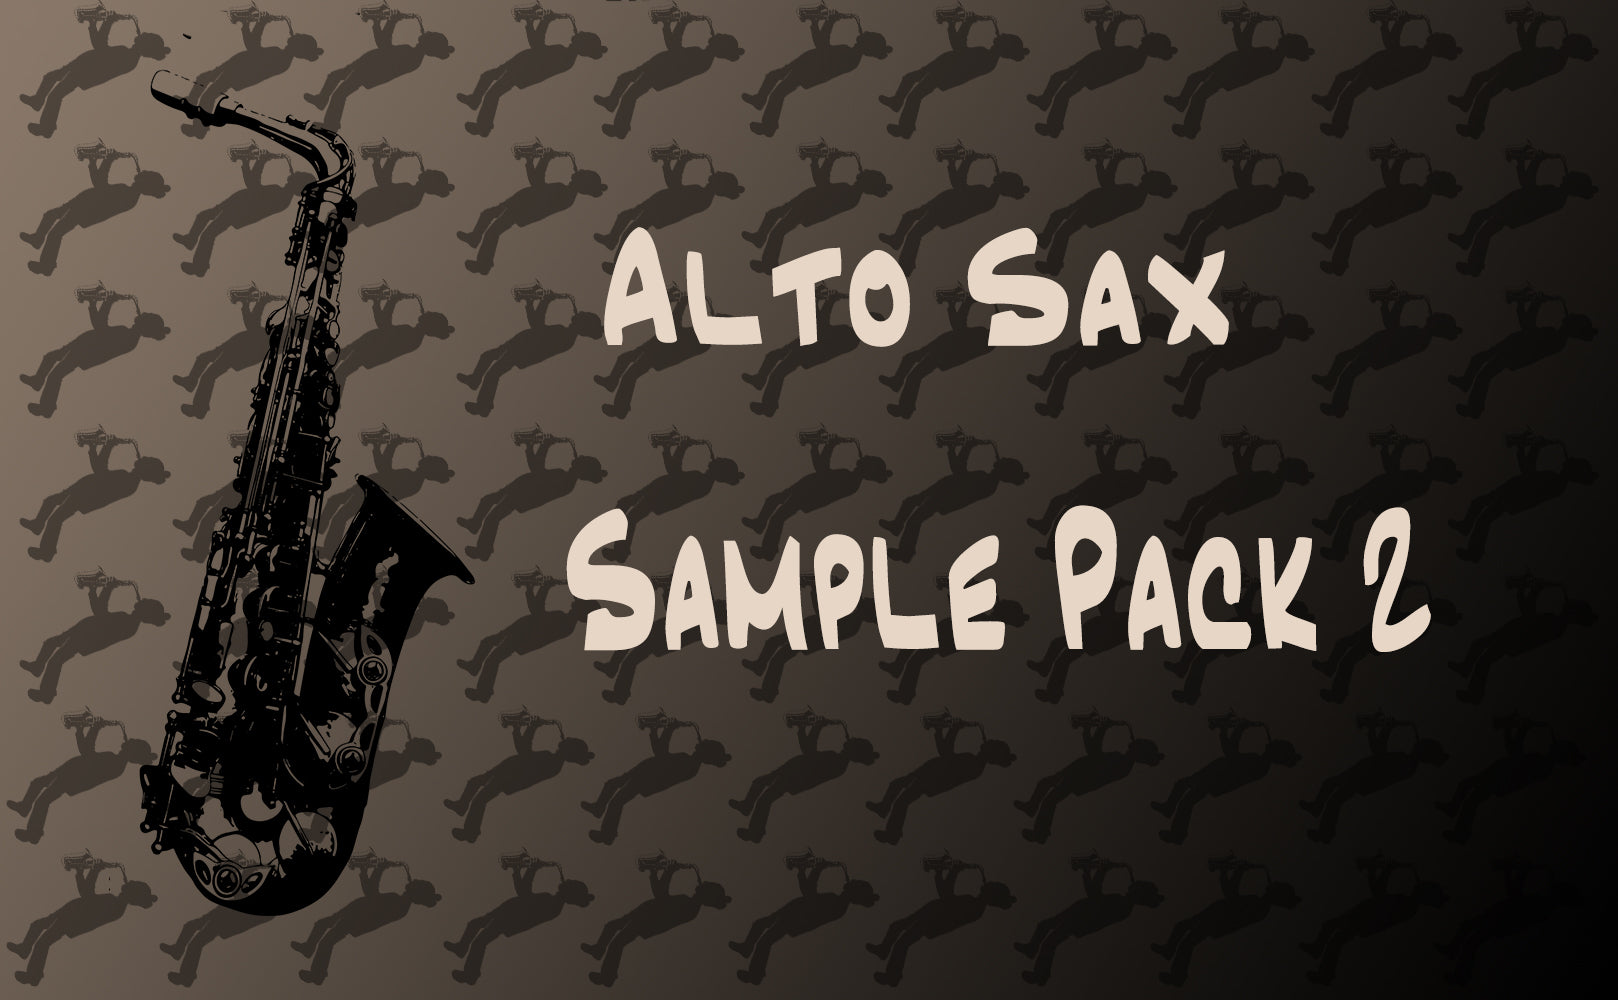 Alto Sax Sample pack 2 - Click to Listen